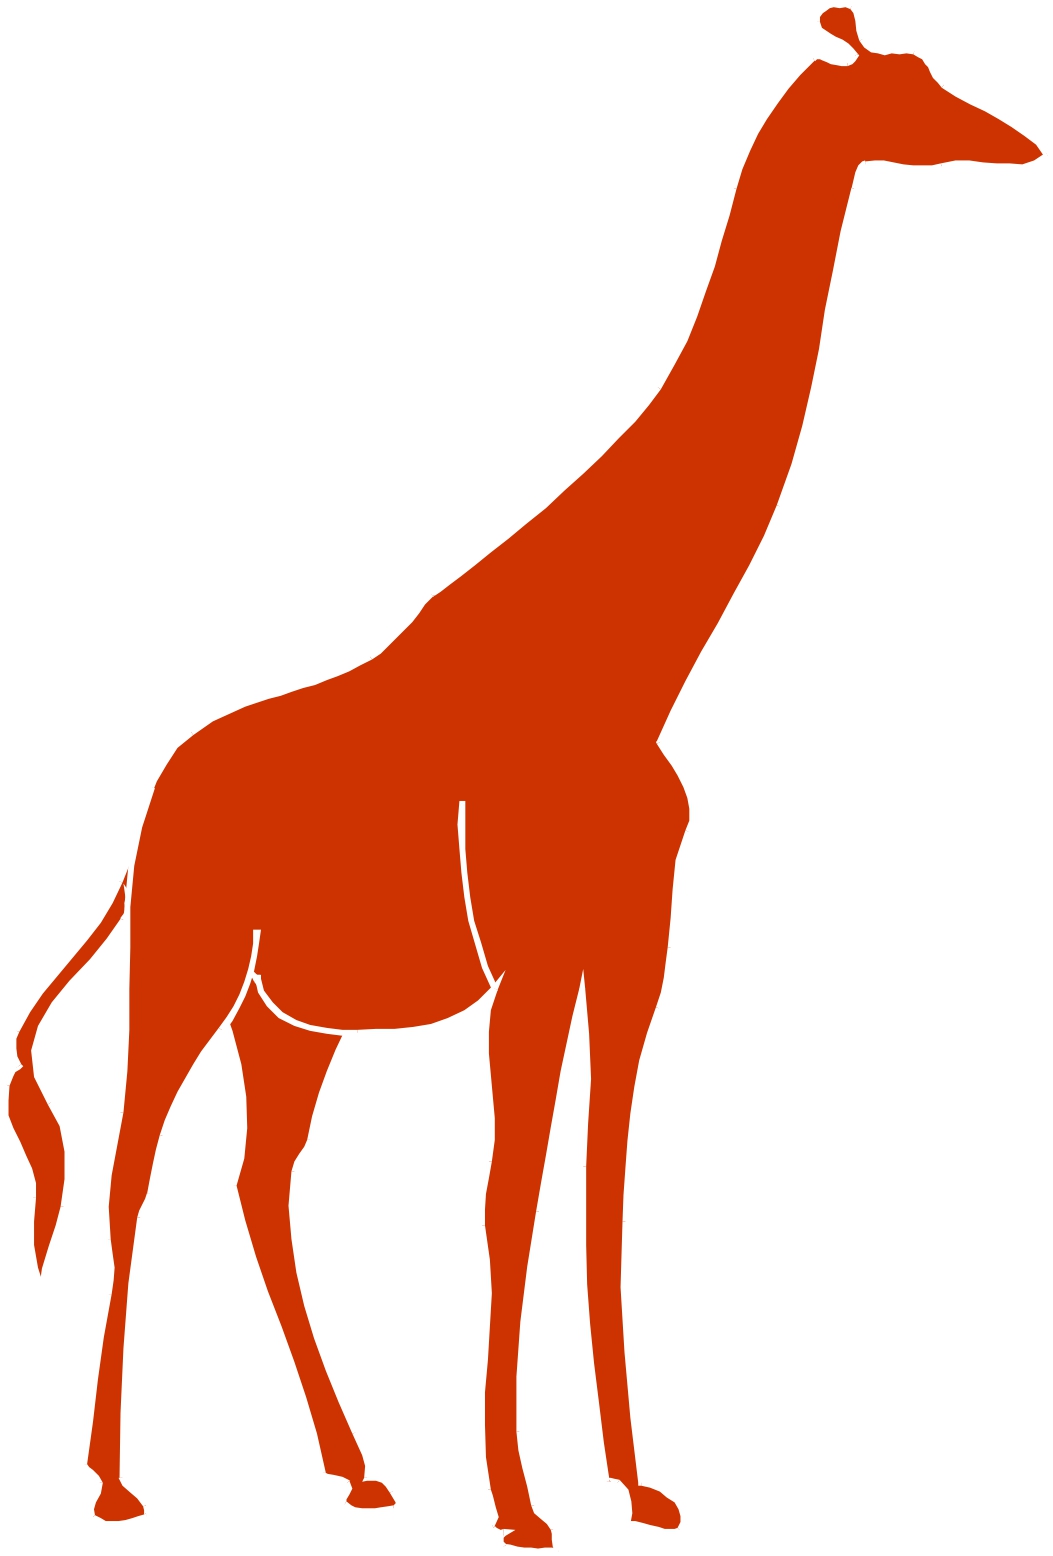 Free Giraffe Silhouette Clip Art - ClipArt Best